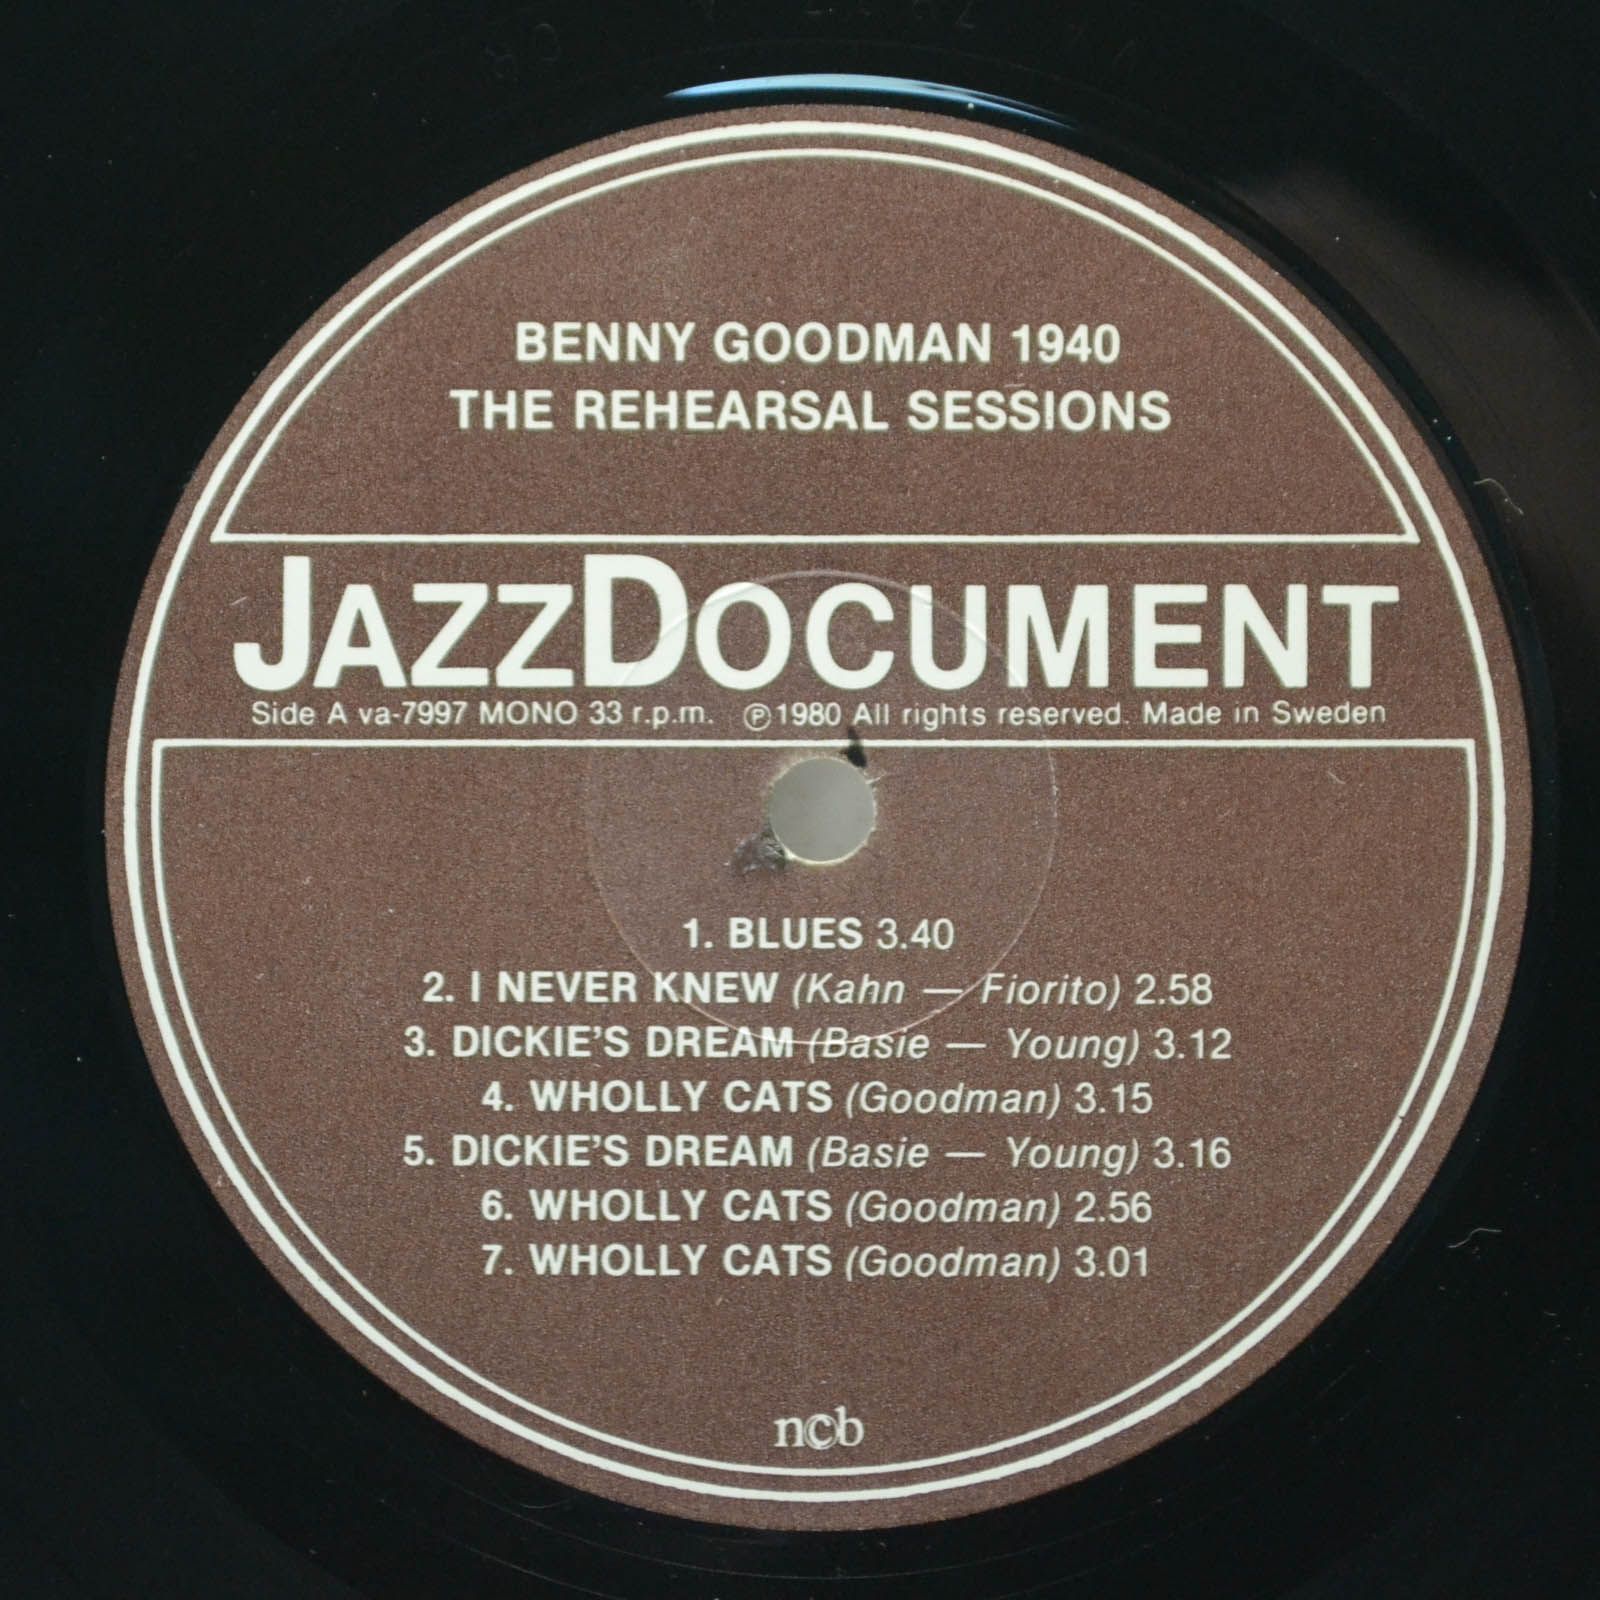 Benny Goodman — The Rehearsal Sessions (Benny Goodman 1940), 1980